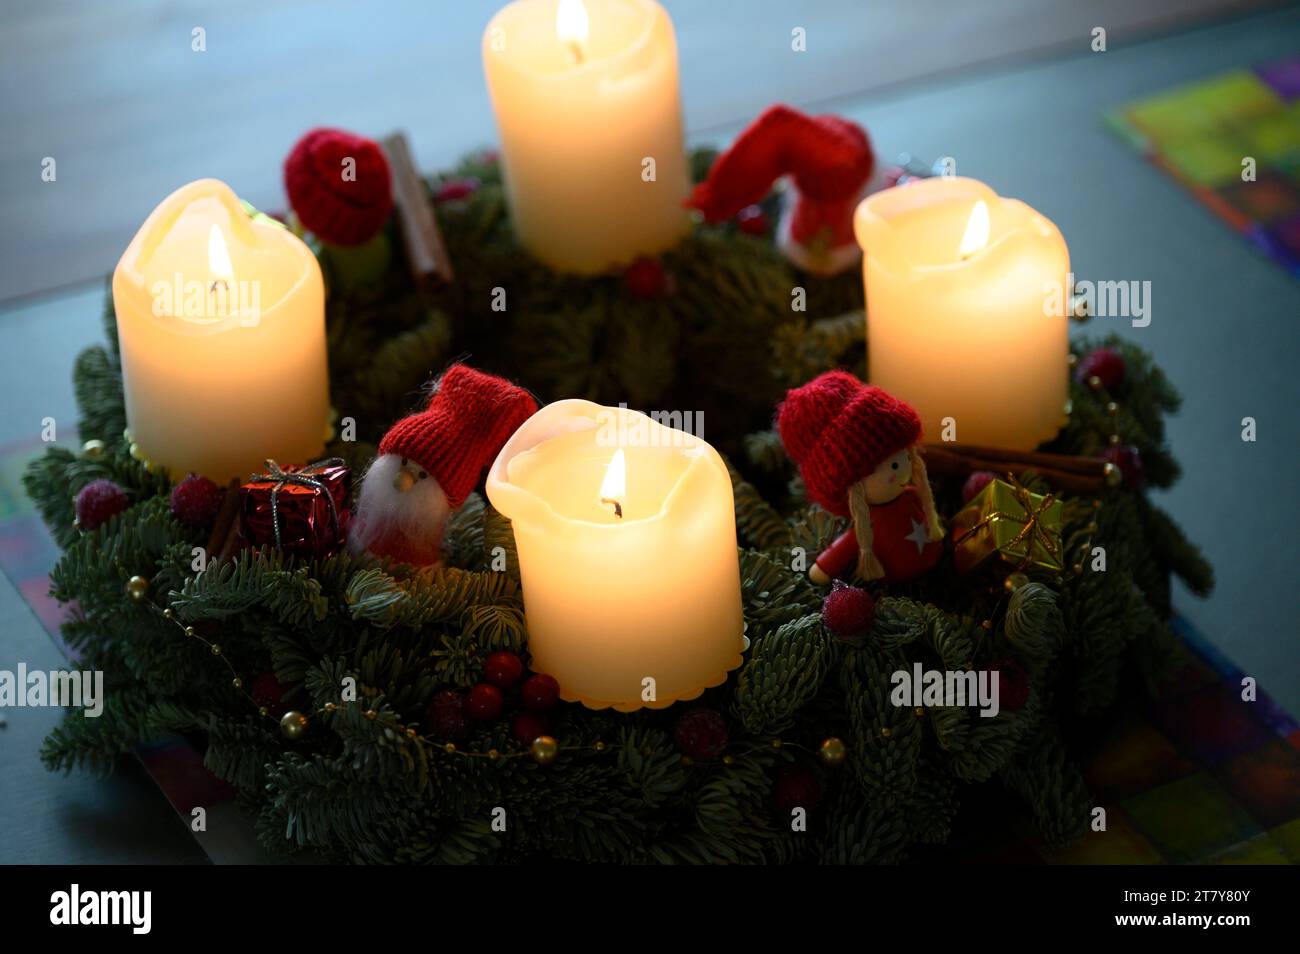 Adventskranz mit brennenden Kerzen, BLF *** Advent wreath with burning candles, BLF 22049614 Bernd Leitner Fotodesign Credit: Imago/Alamy Live News Stock Photo